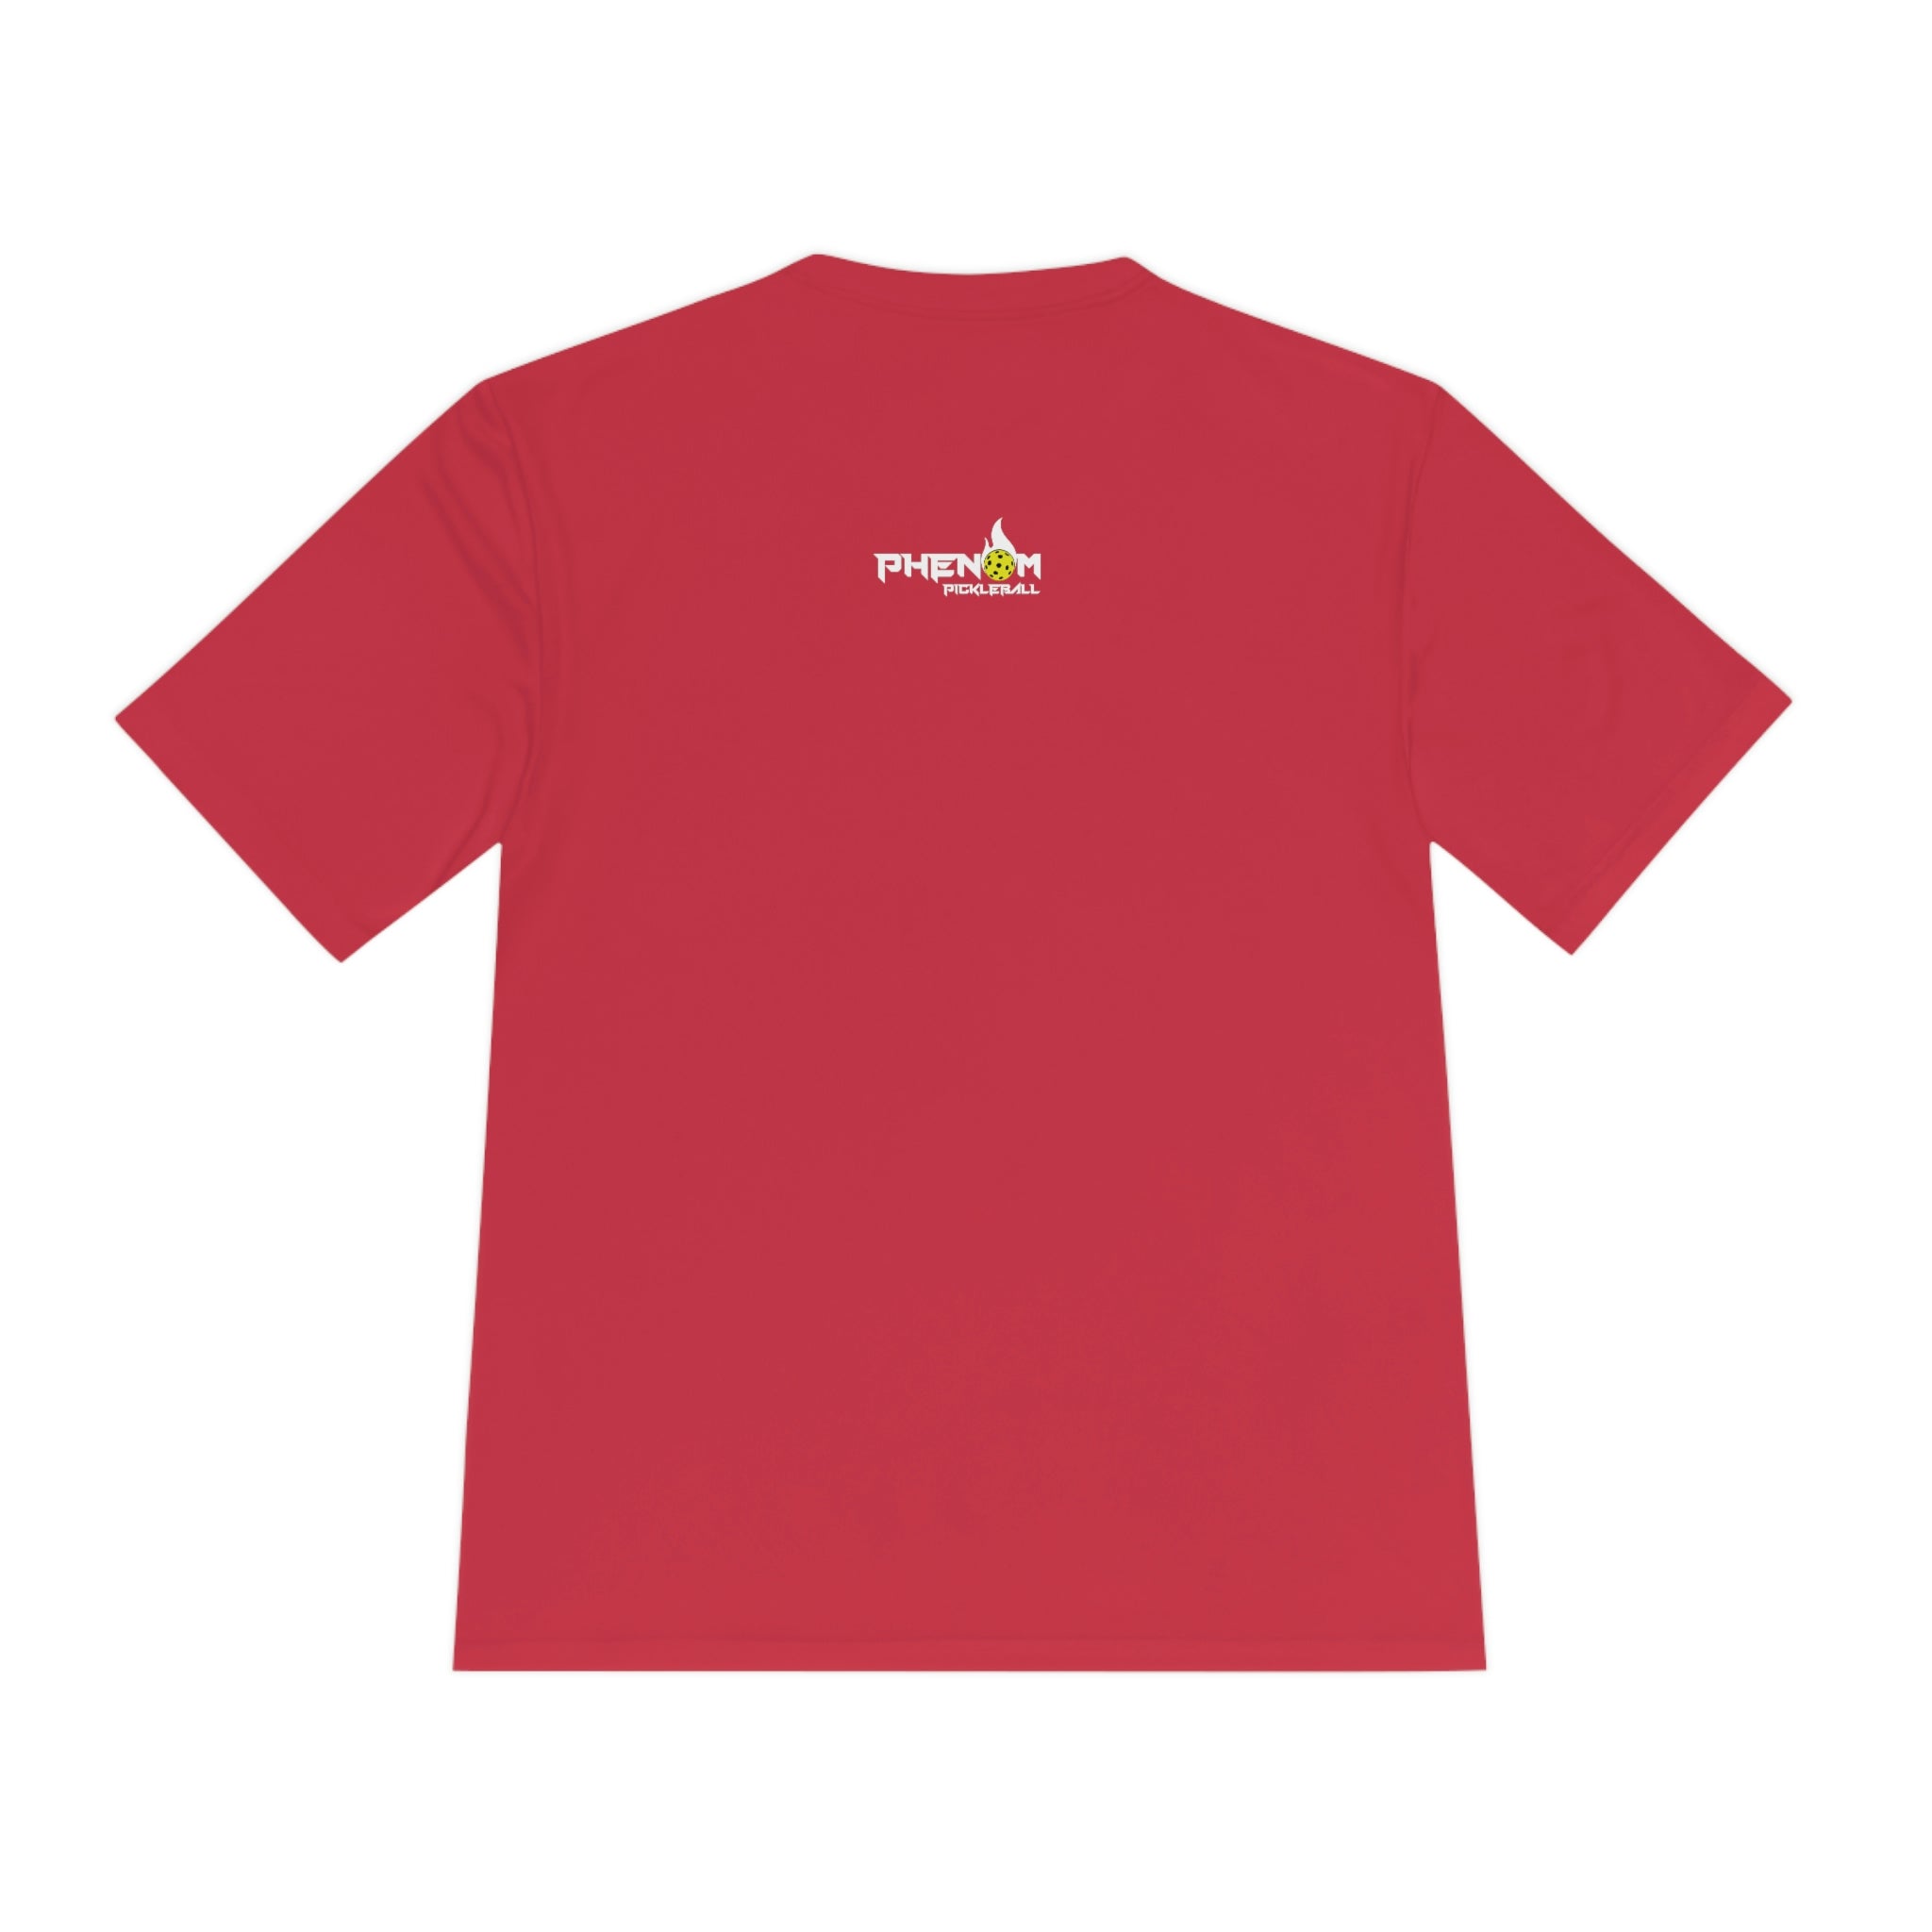 red heavy dinker men's athletic pickleball apparel shirt phenom logo back view